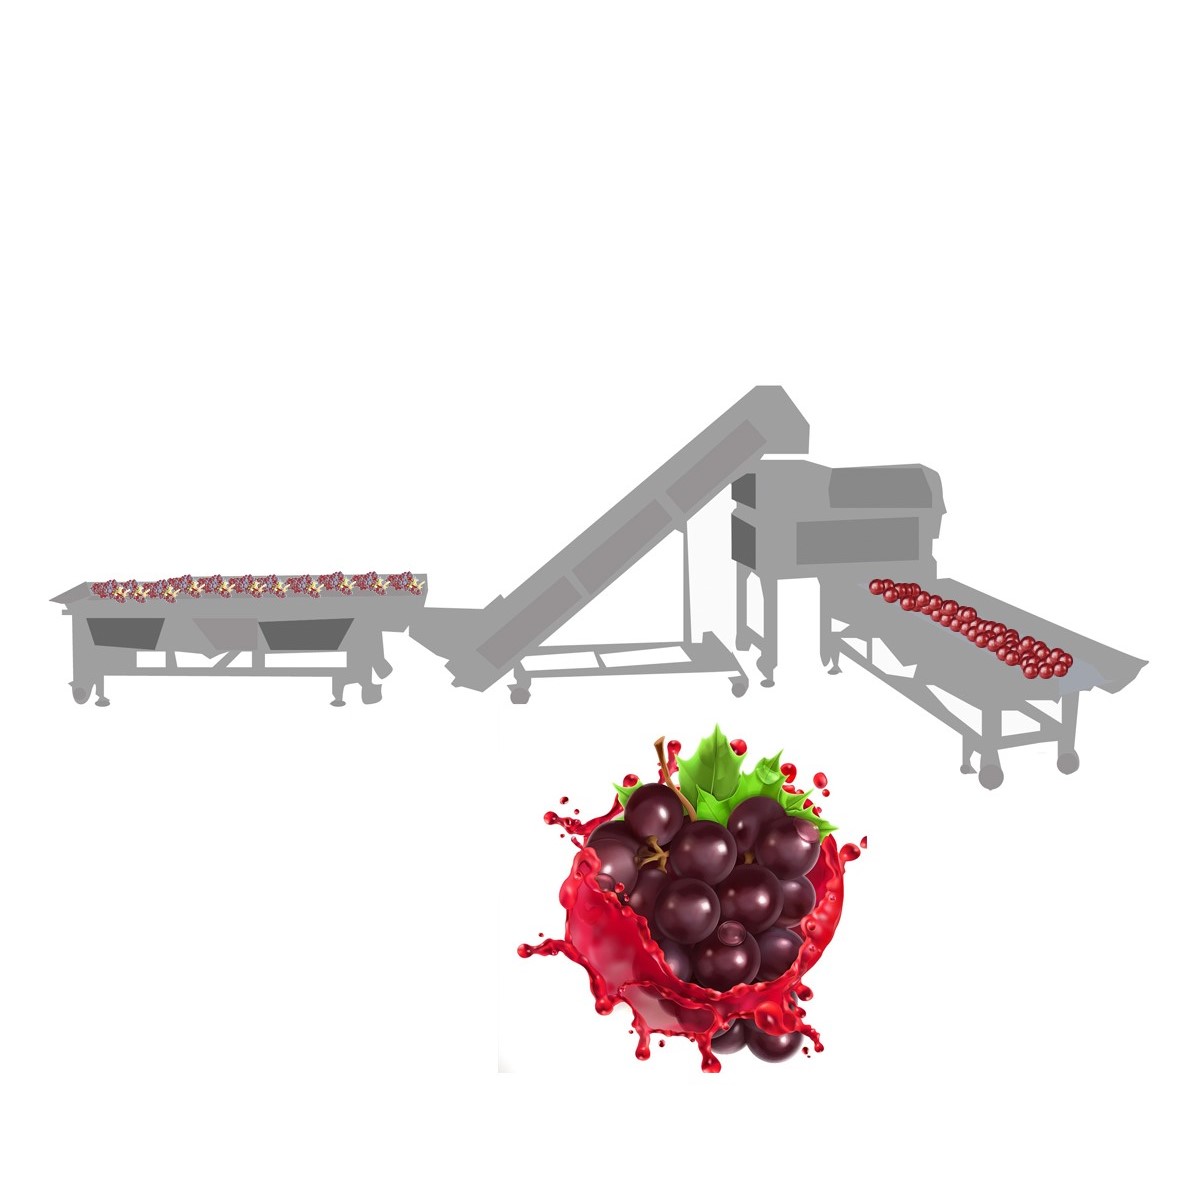 Grape processing plant